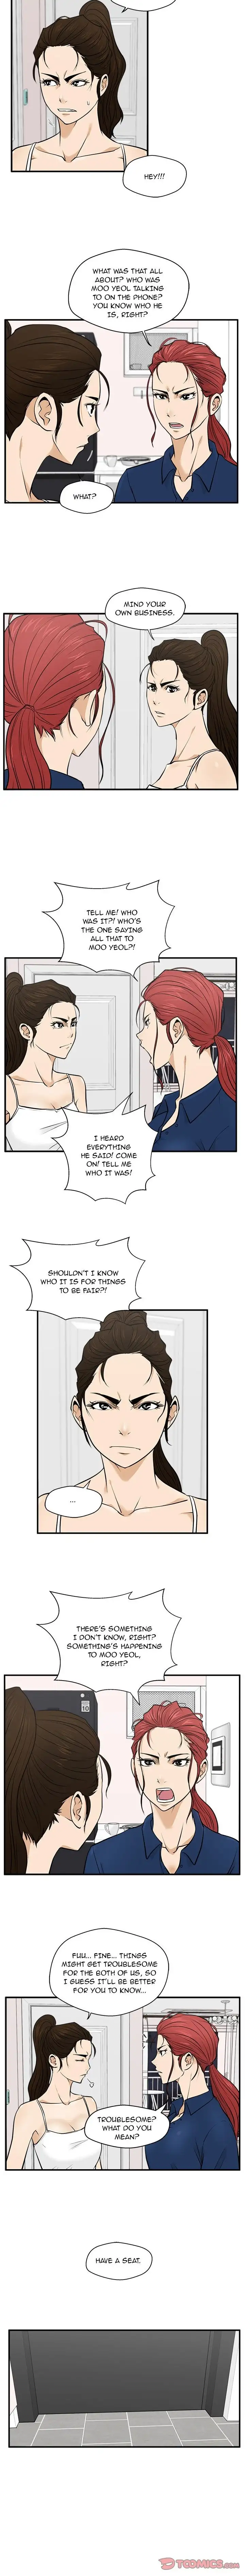 Mr. Kang - Chapter 55 Page 10